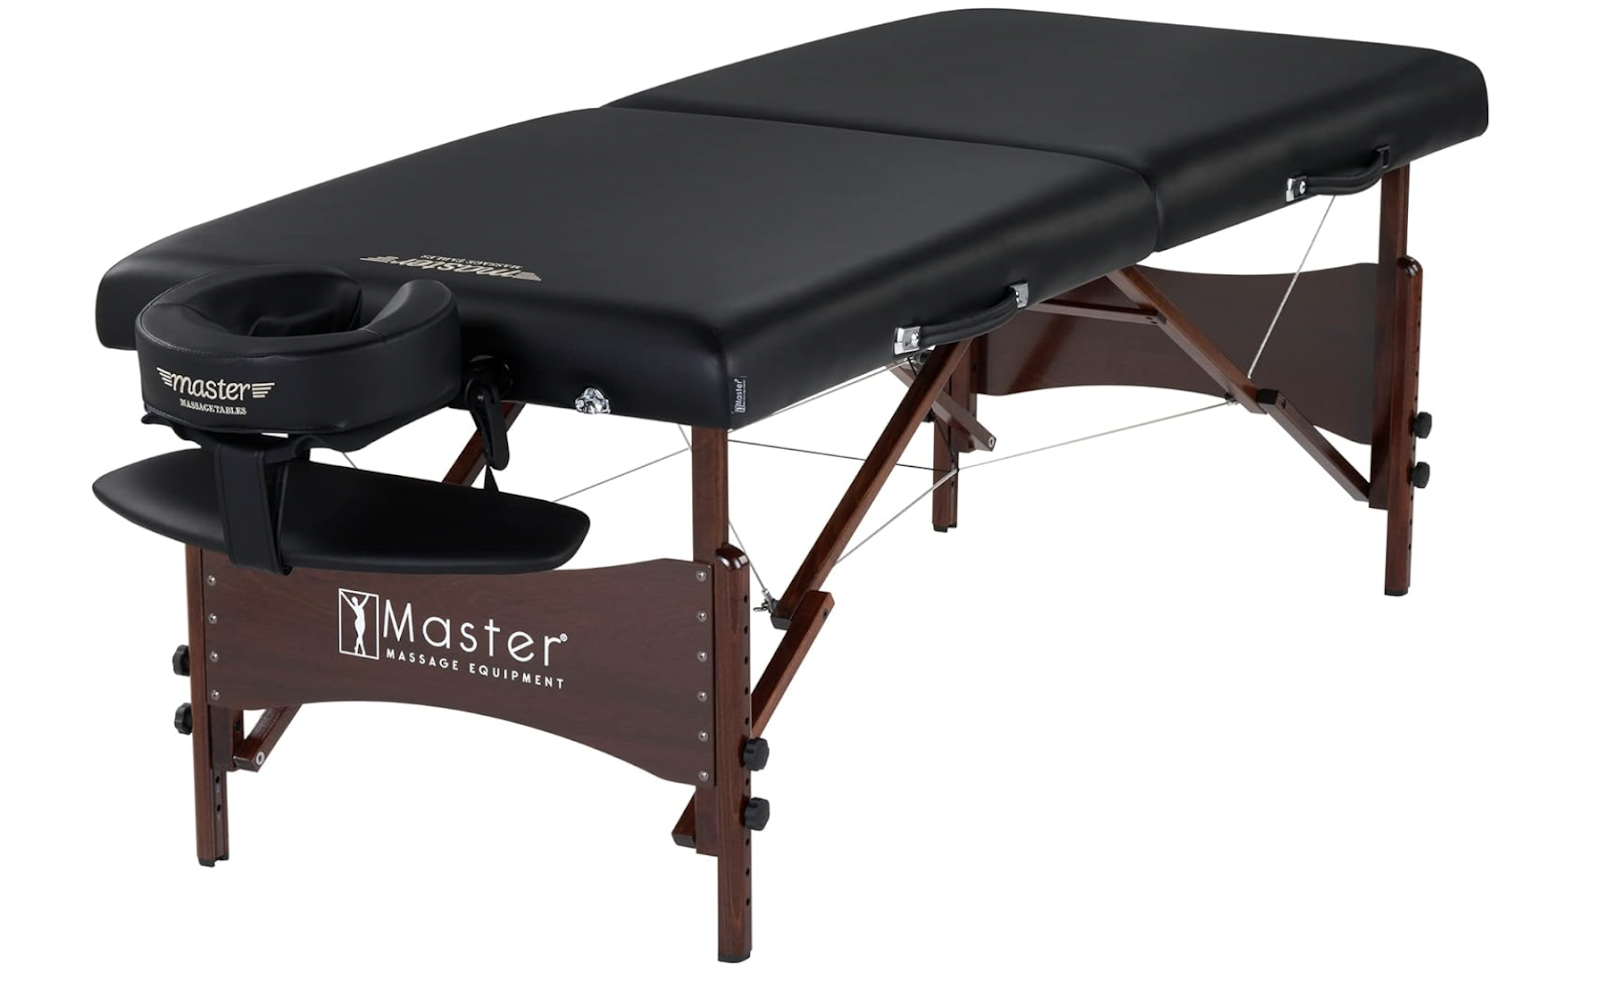 Master Massage Newport Portable Massage Table from Amazon